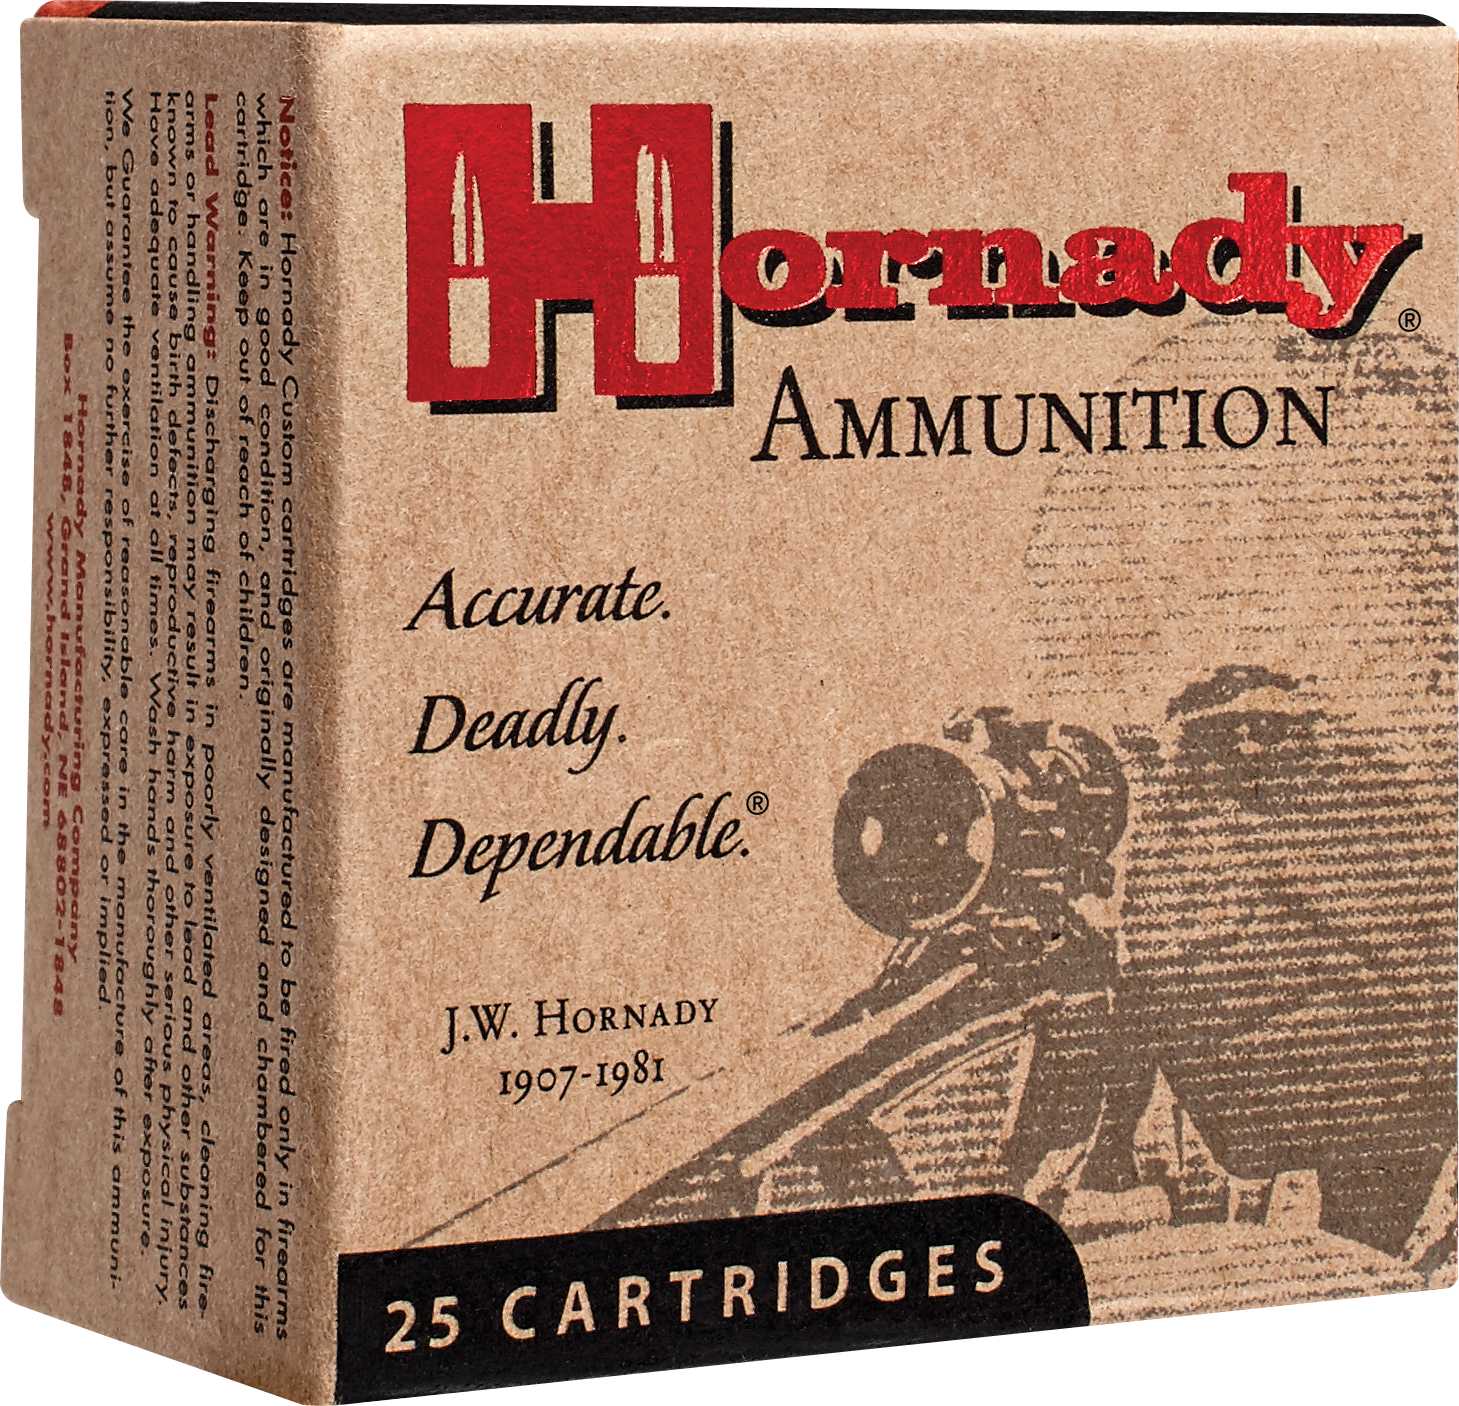 357 Sig 20 Rounds Ammunition Hornady 147 Grain Soft Point